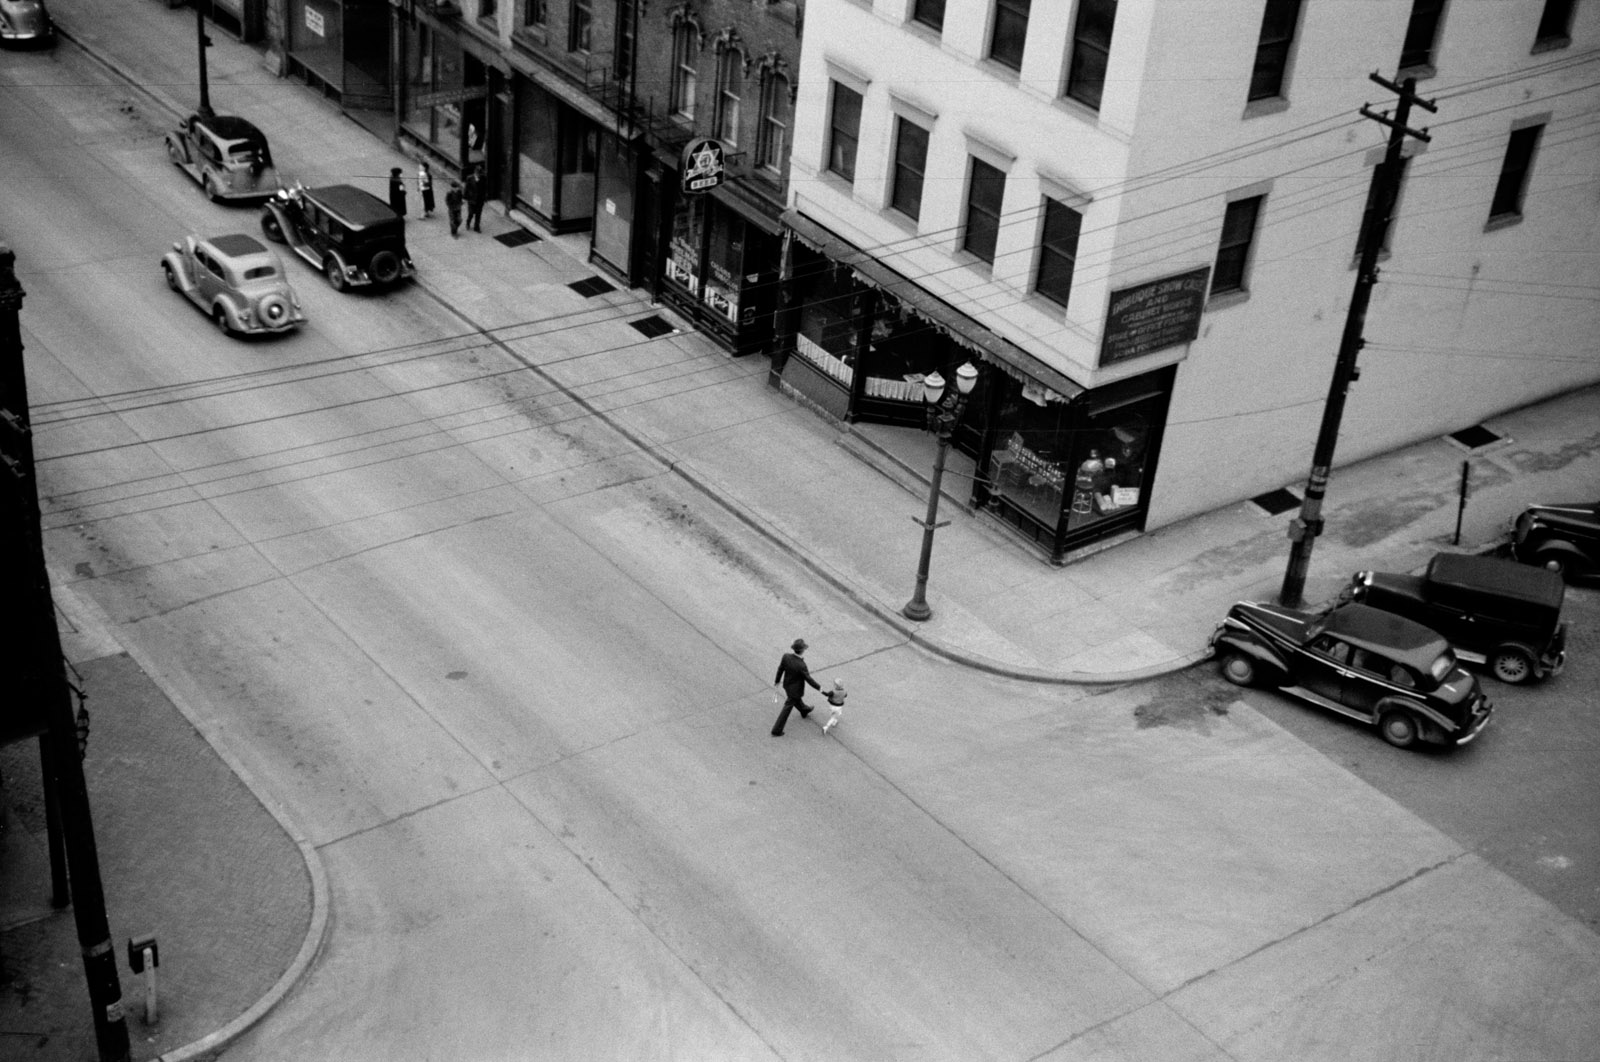 Man and boy crossing the street, Dubuque, Iowa 1940